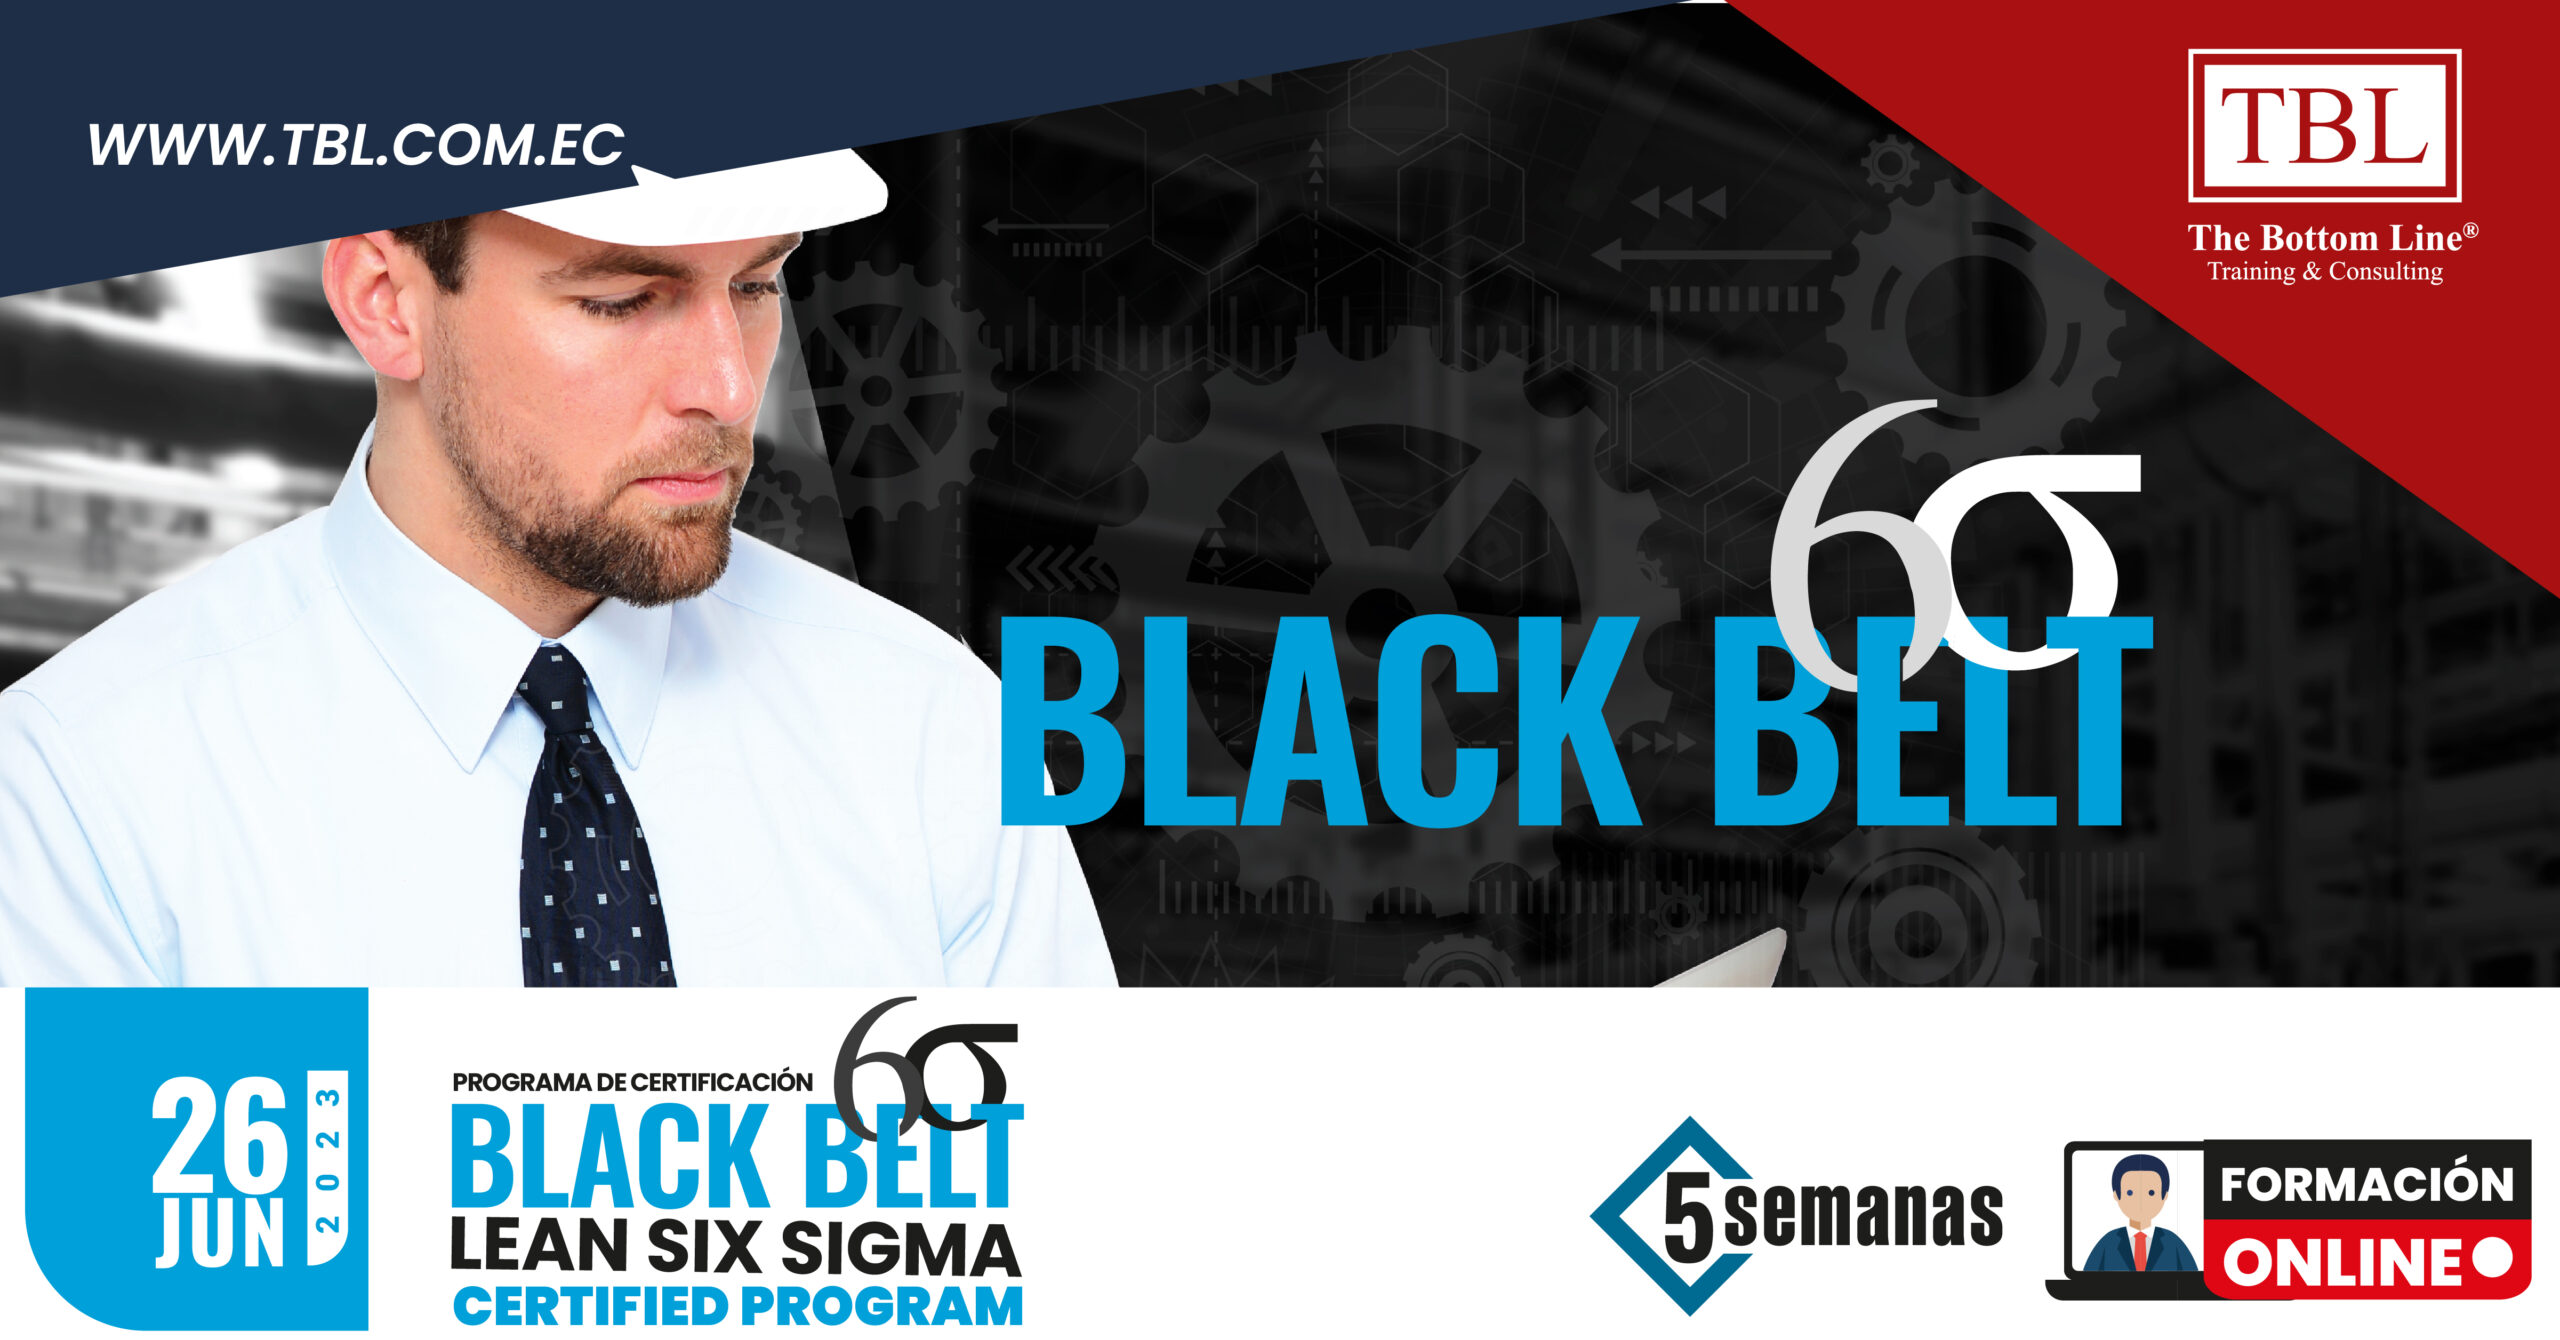 Black Belt Lean Six Sigma